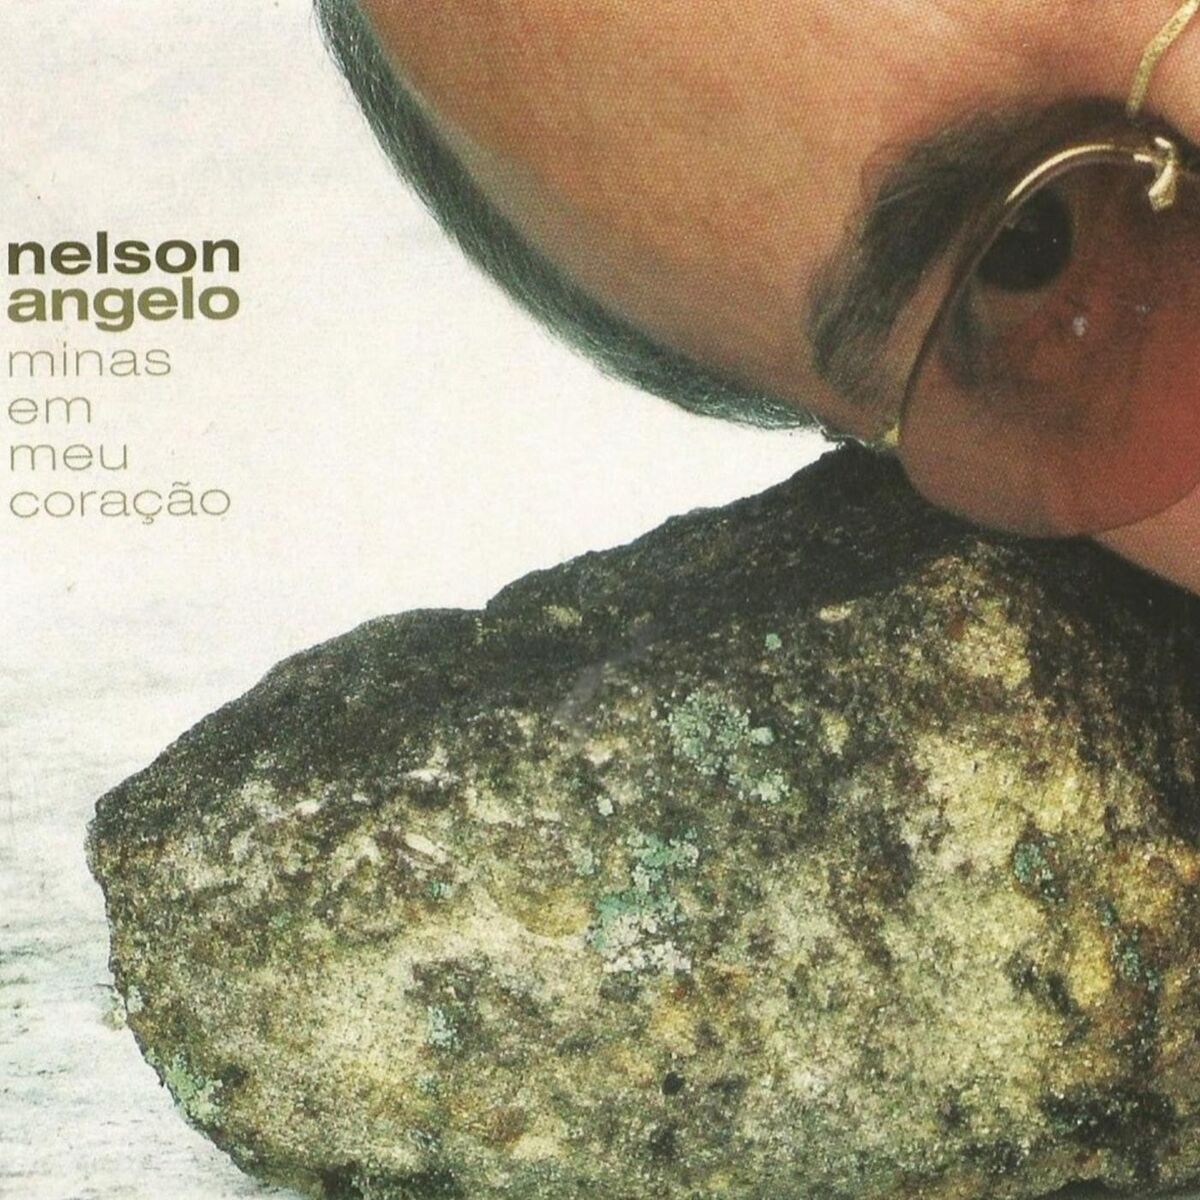 Nelson Angelo: albums, songs, playlists | Listen on Deezer